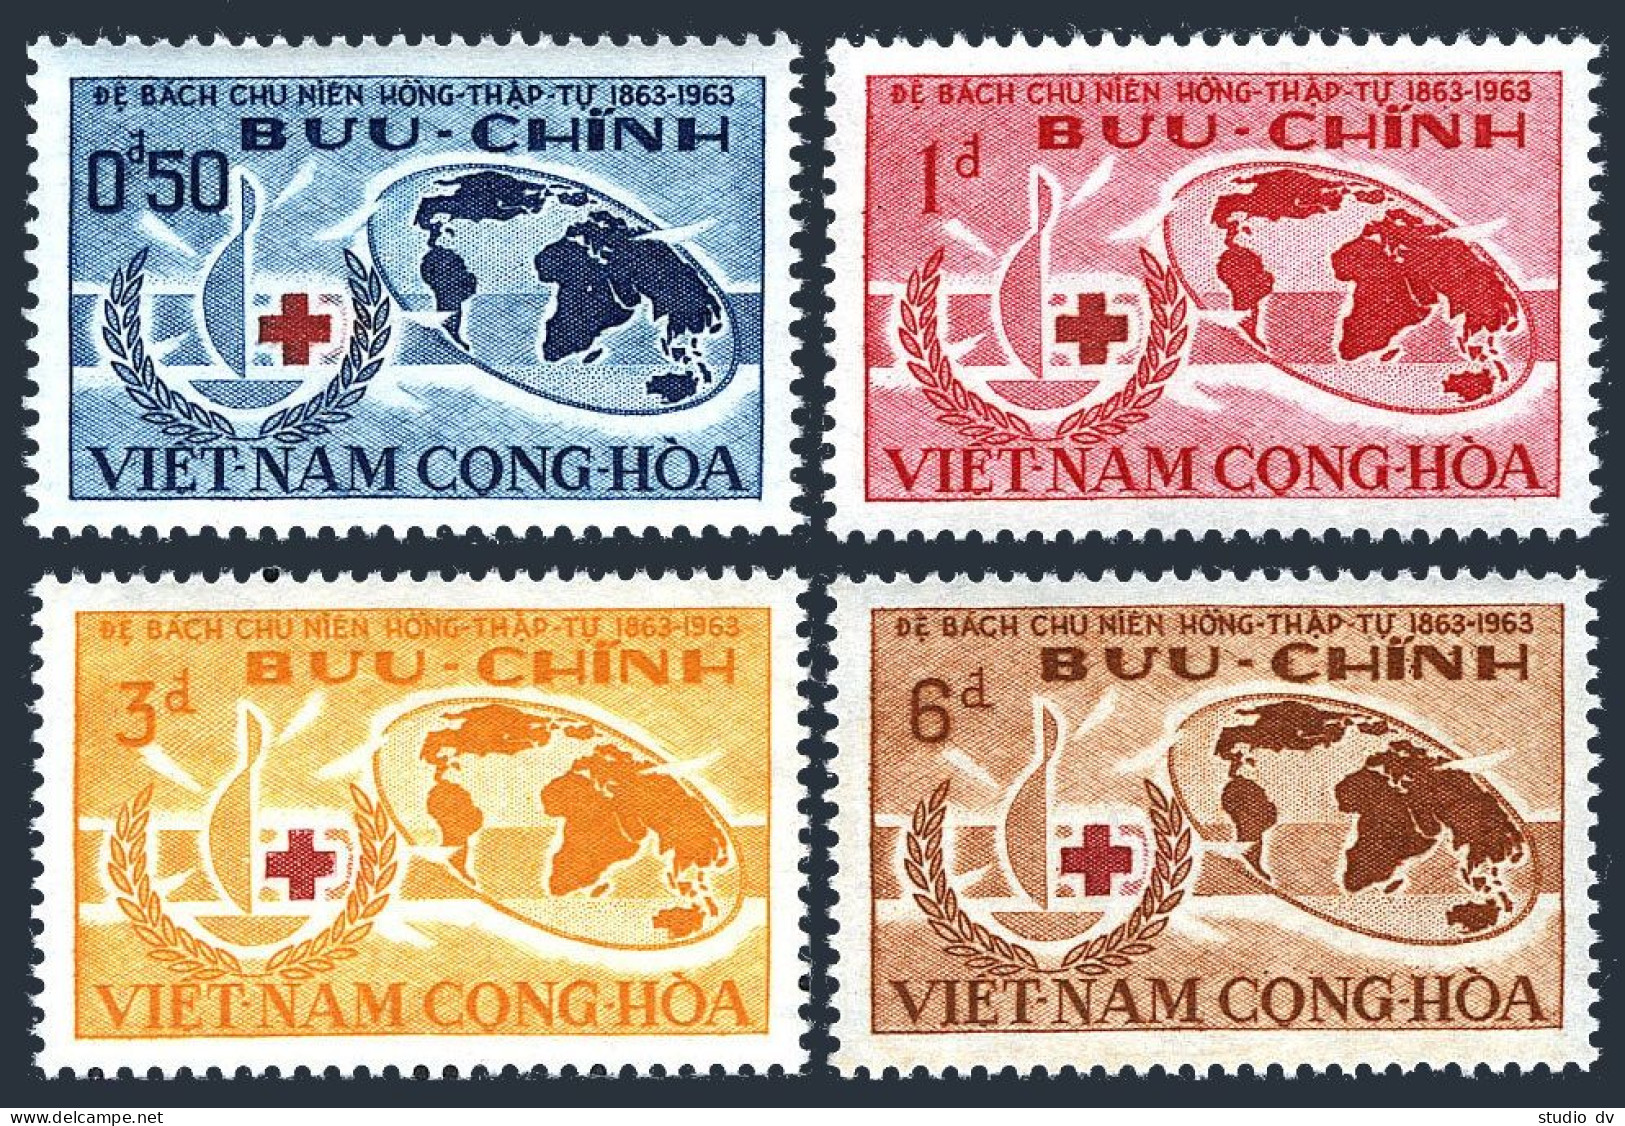 Viet Nam South 219-222, MNH. Michel 296-299. Red Cross-100, 1963. Map. - Viêt-Nam